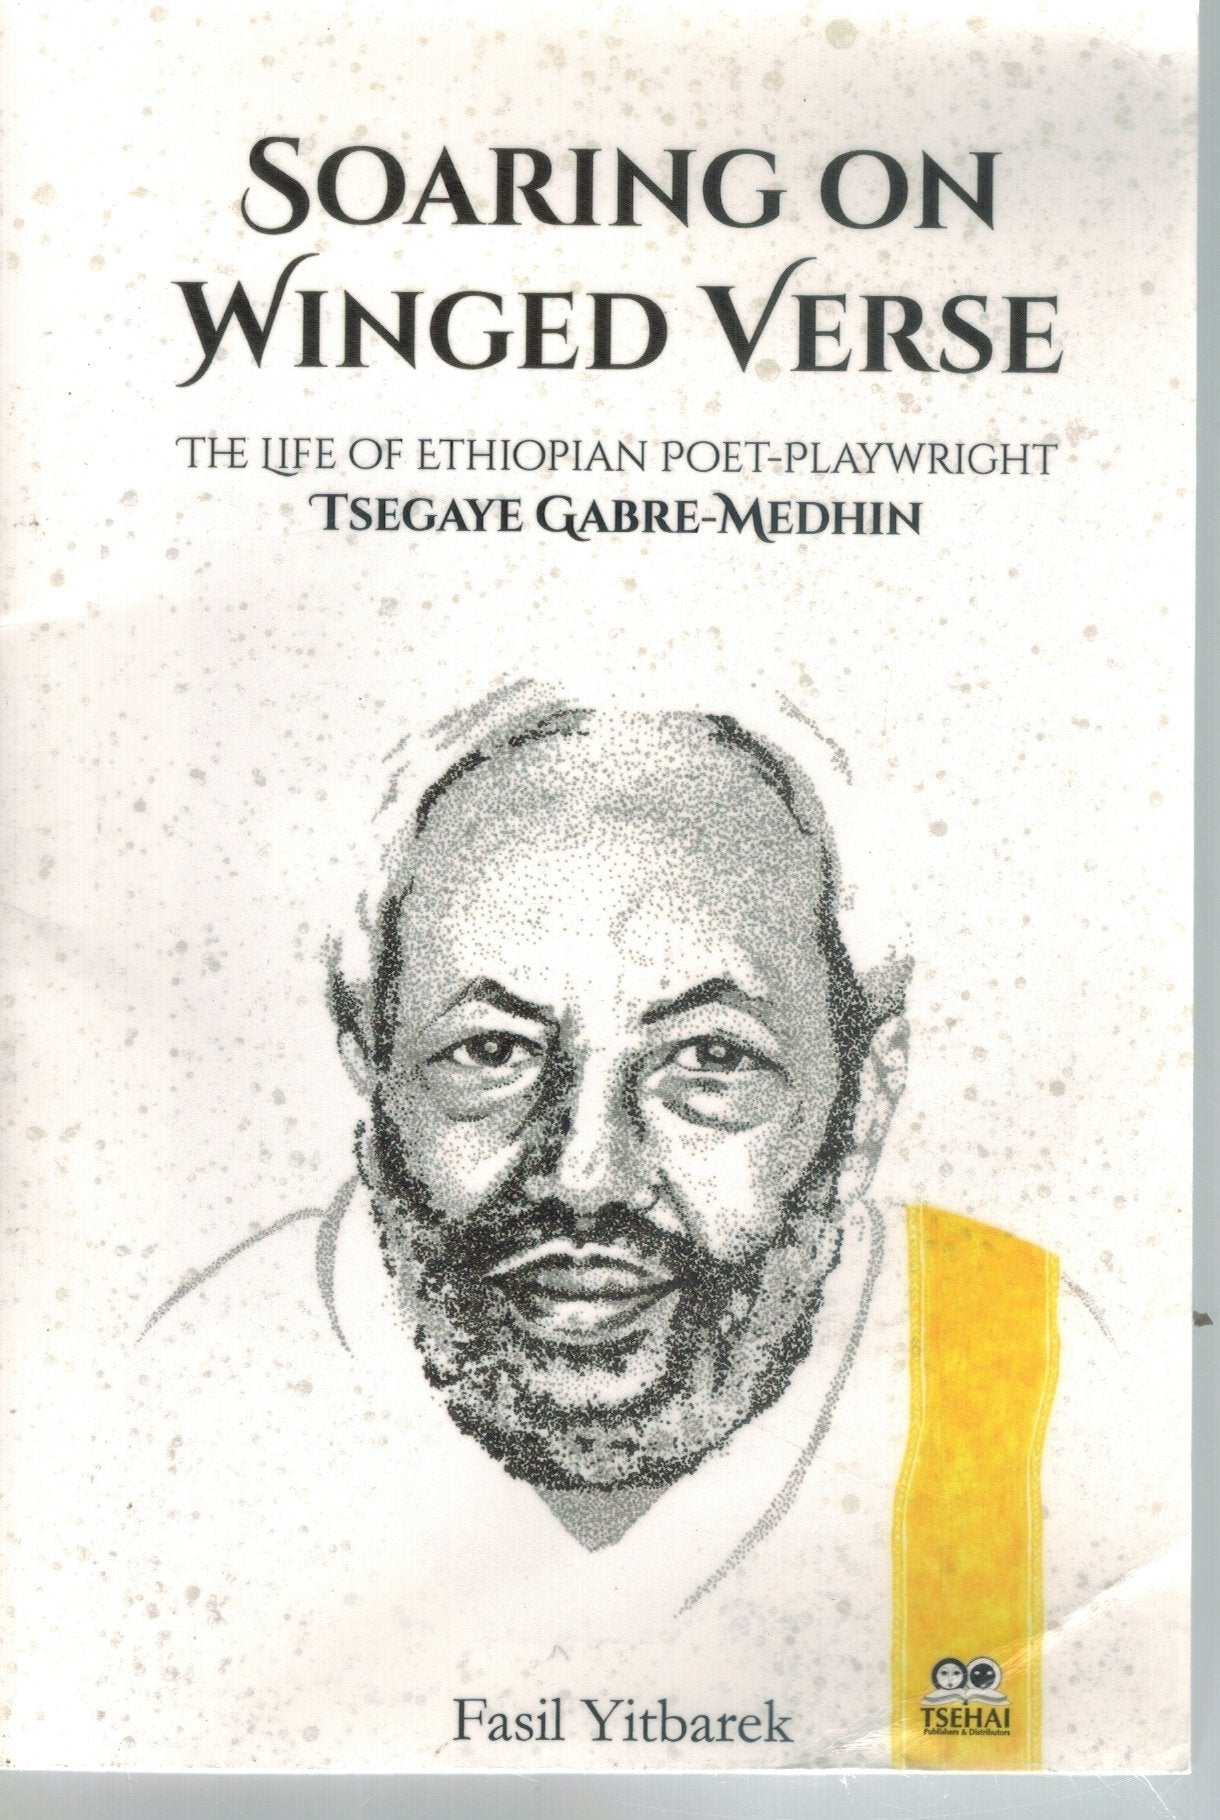 SOARING ON WINGED VERSE, THE LIFE OF ETHIOPIAN POET-PLAYWRIGHT TSEGAYE  GABRE-MEDHIN